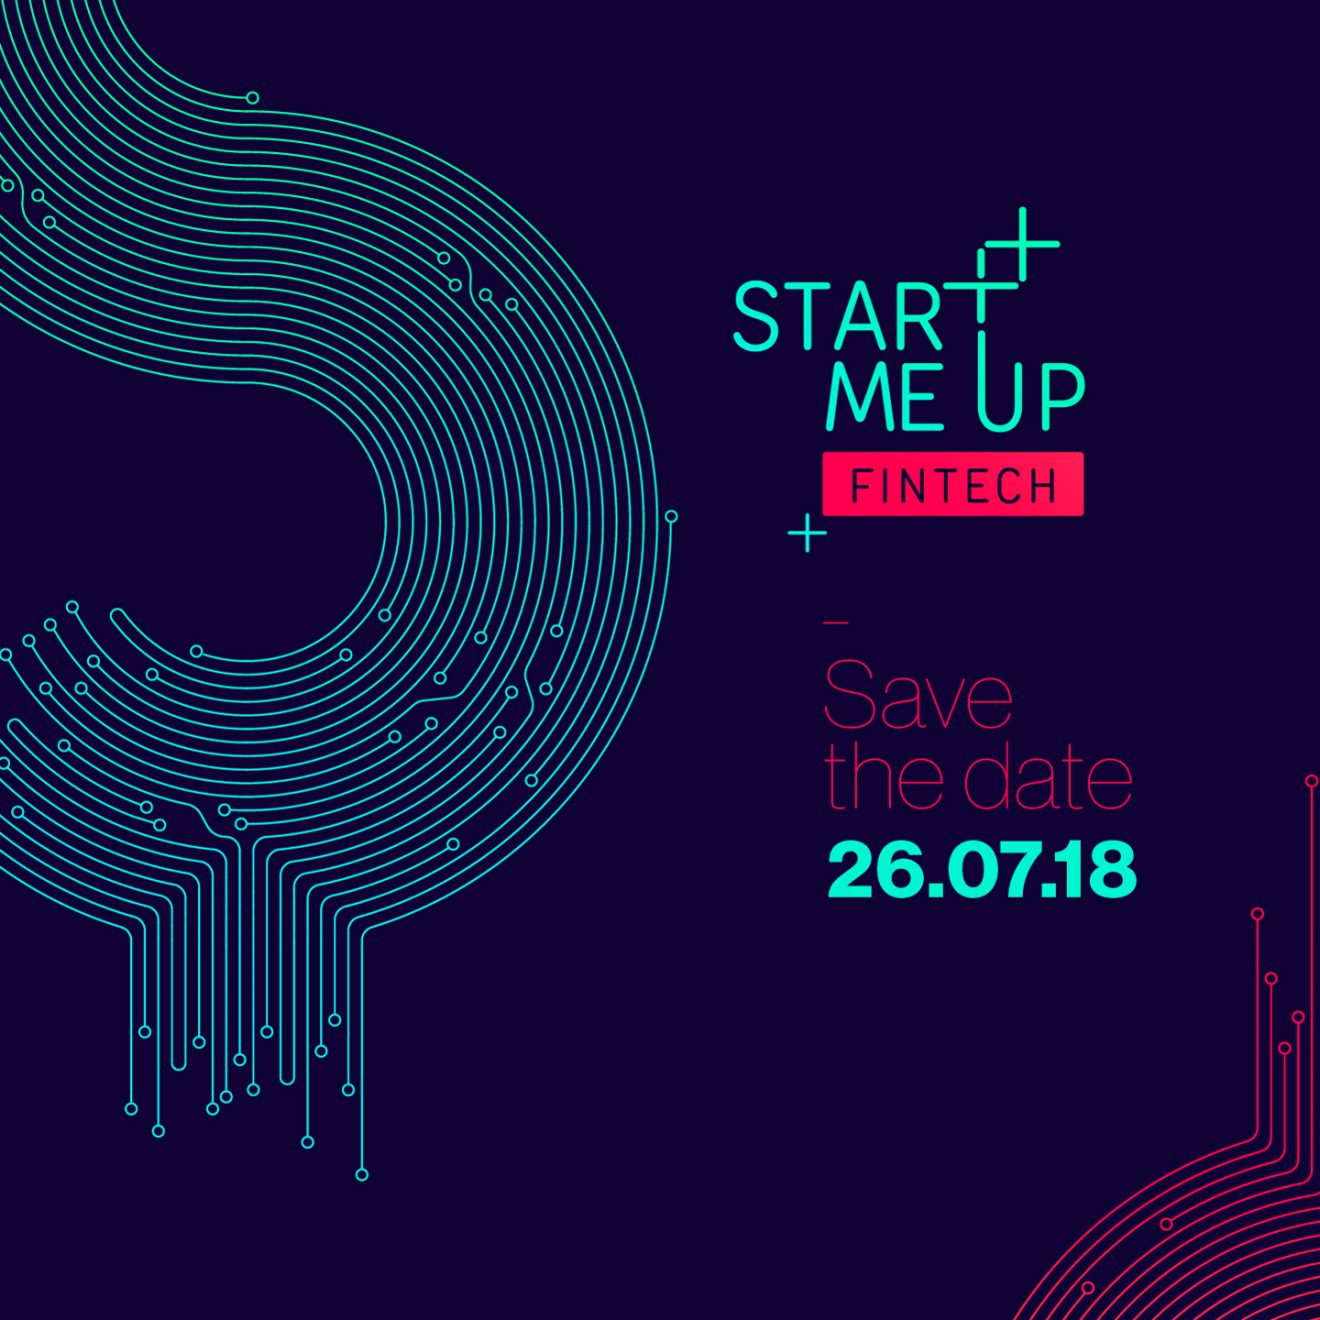 01. Save the date - SMU Fintech